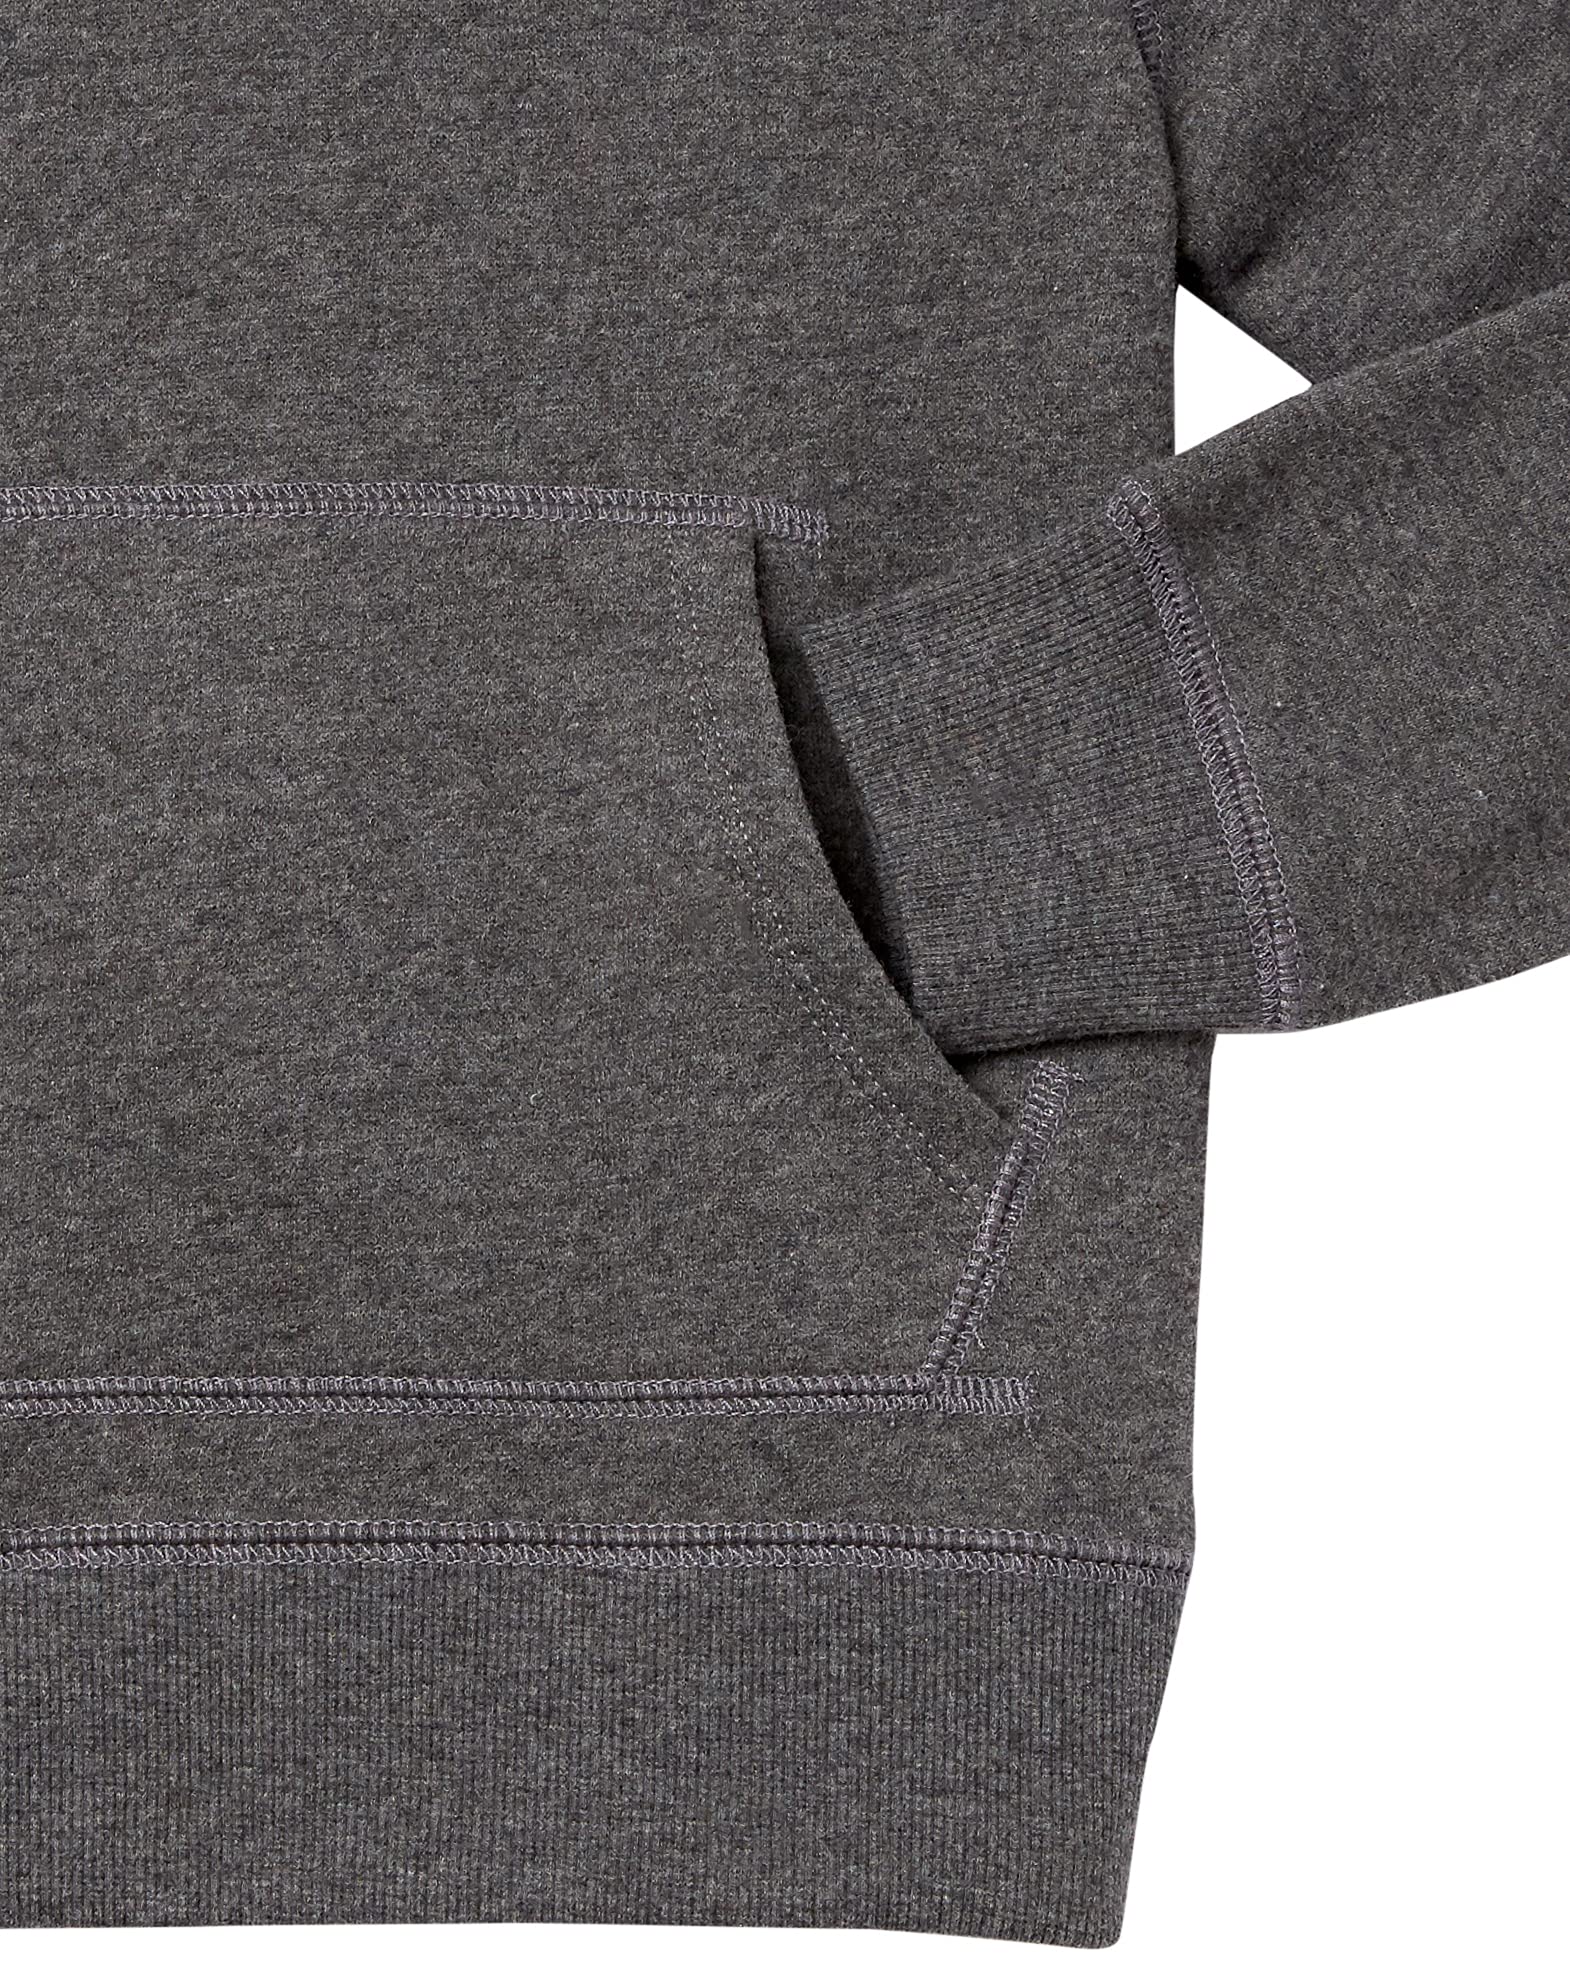 Amazon Essentials Boys and Toddlers' Fleece Pullover Hoodie Sweatshirts